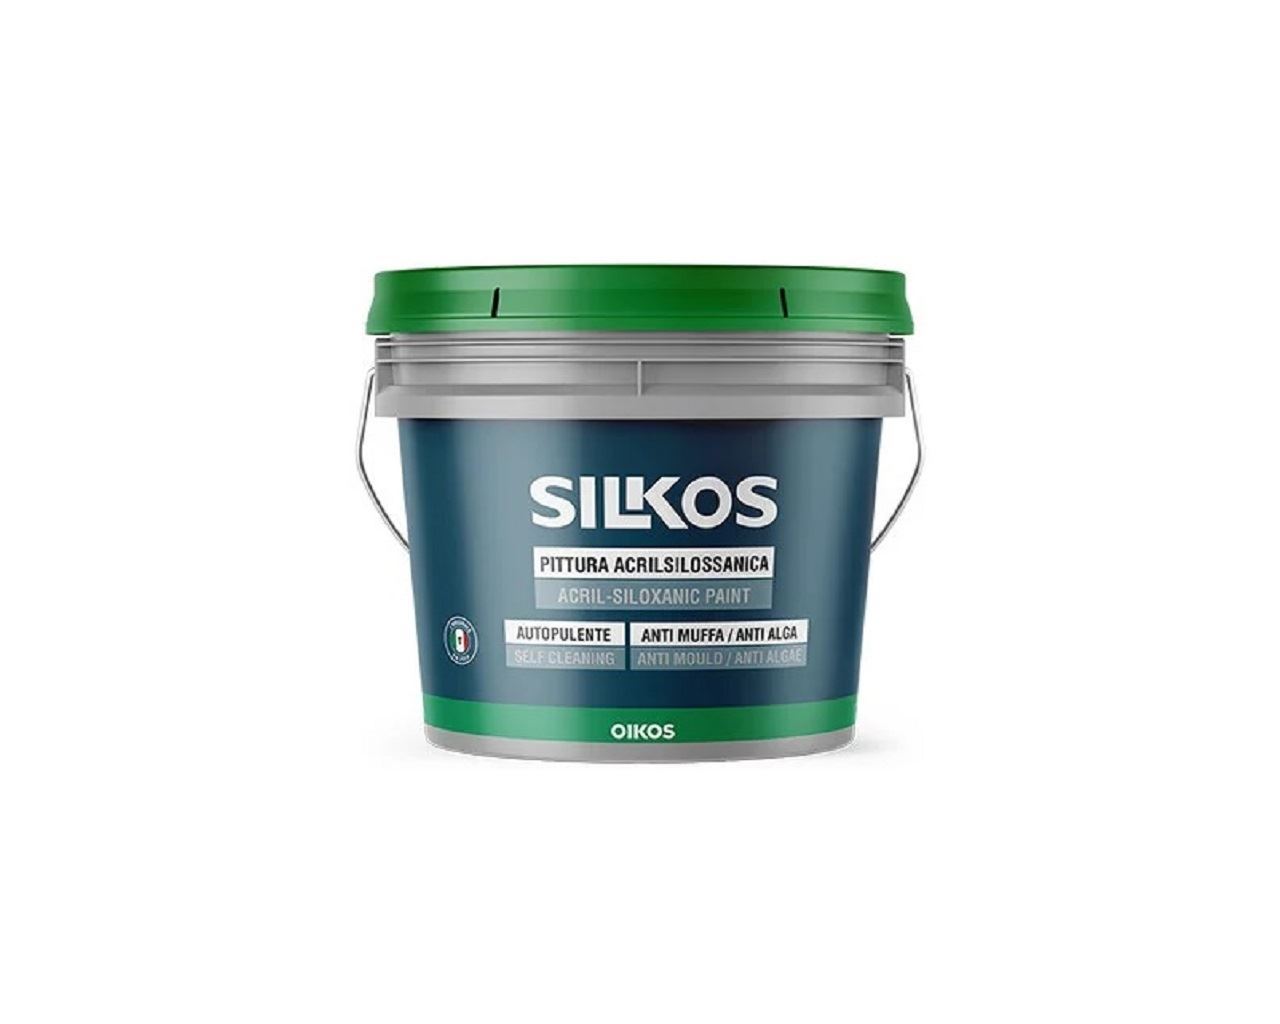 Silkos Torino - idropittura quarzo acrilsilossanica autopulente alta resa antimuffa antialga per esterni